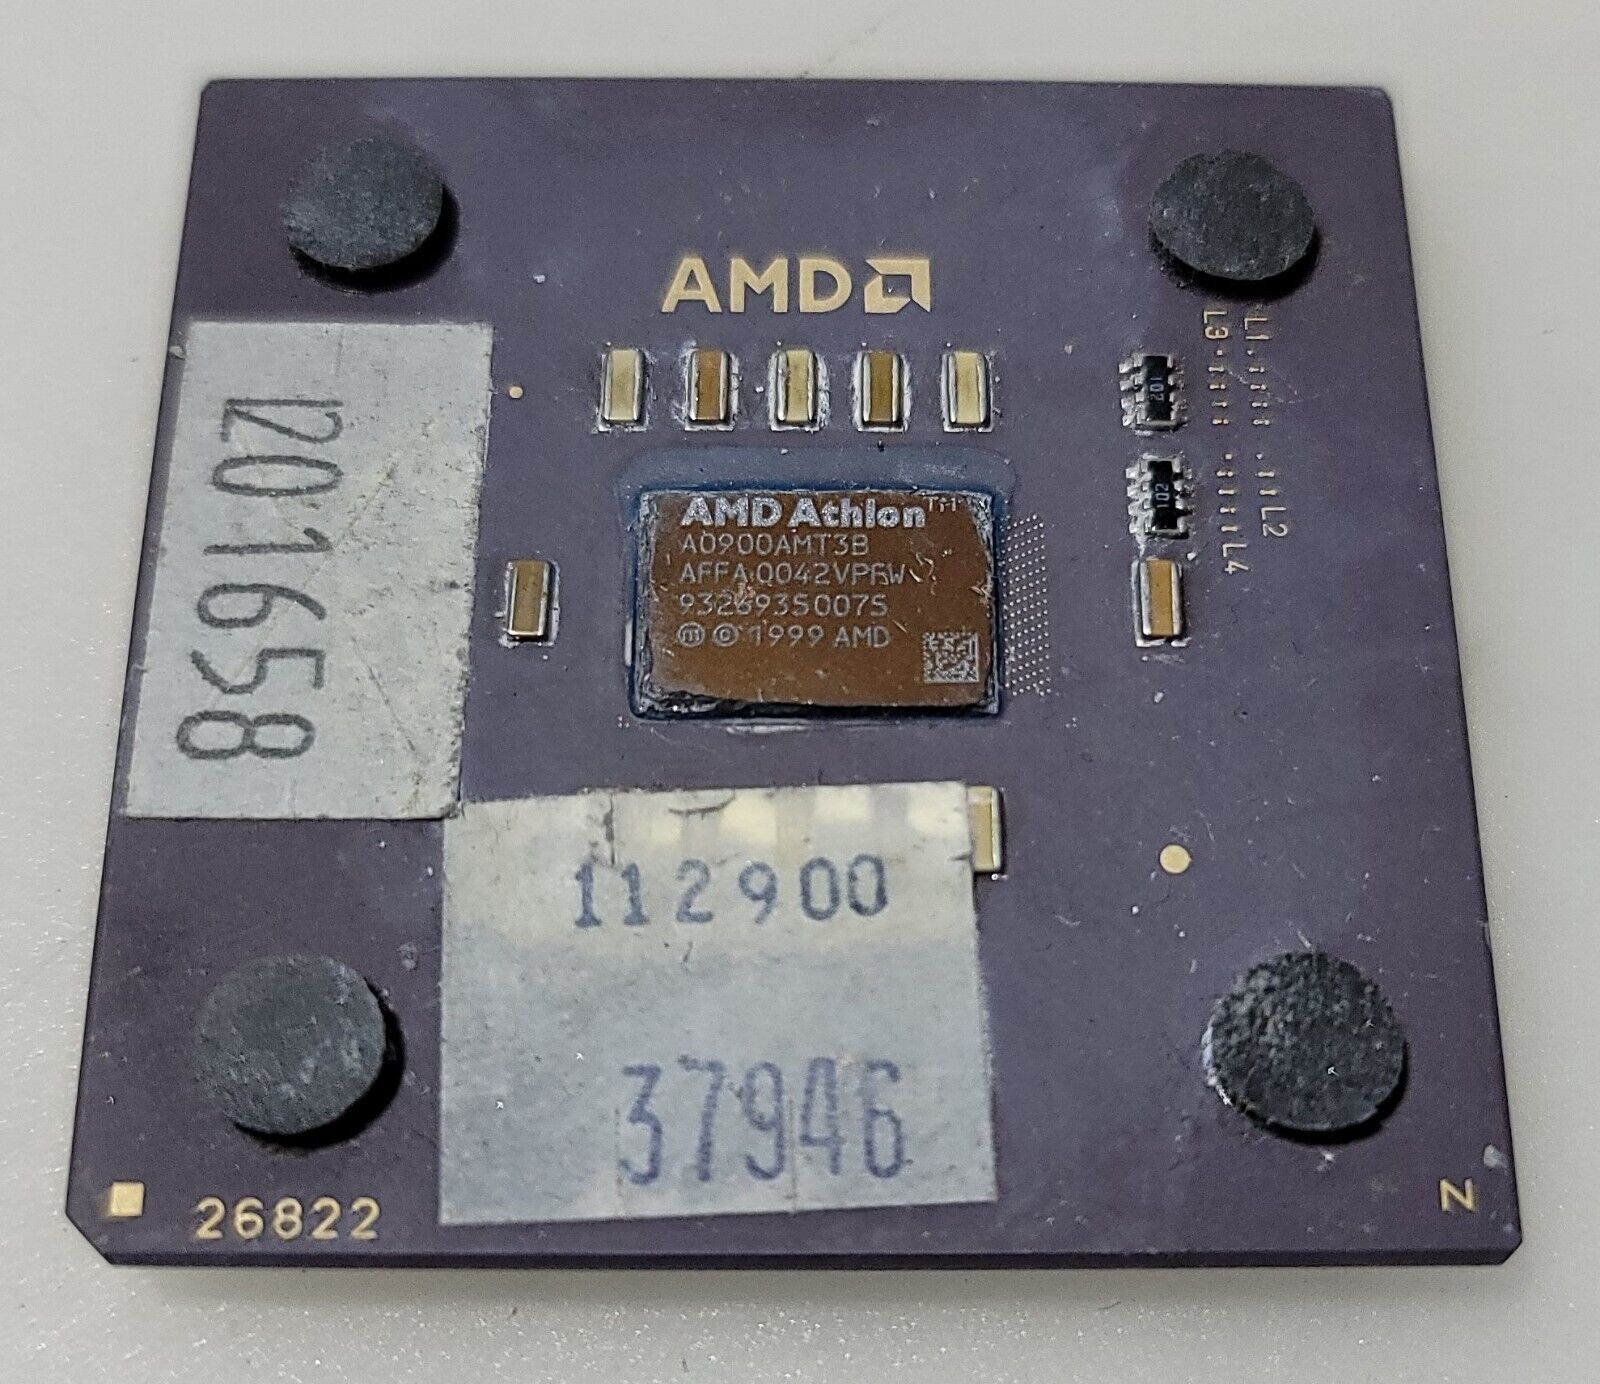 Rare Vintage AMD Athlon A0900AMT3B Ceramic Processor 1999